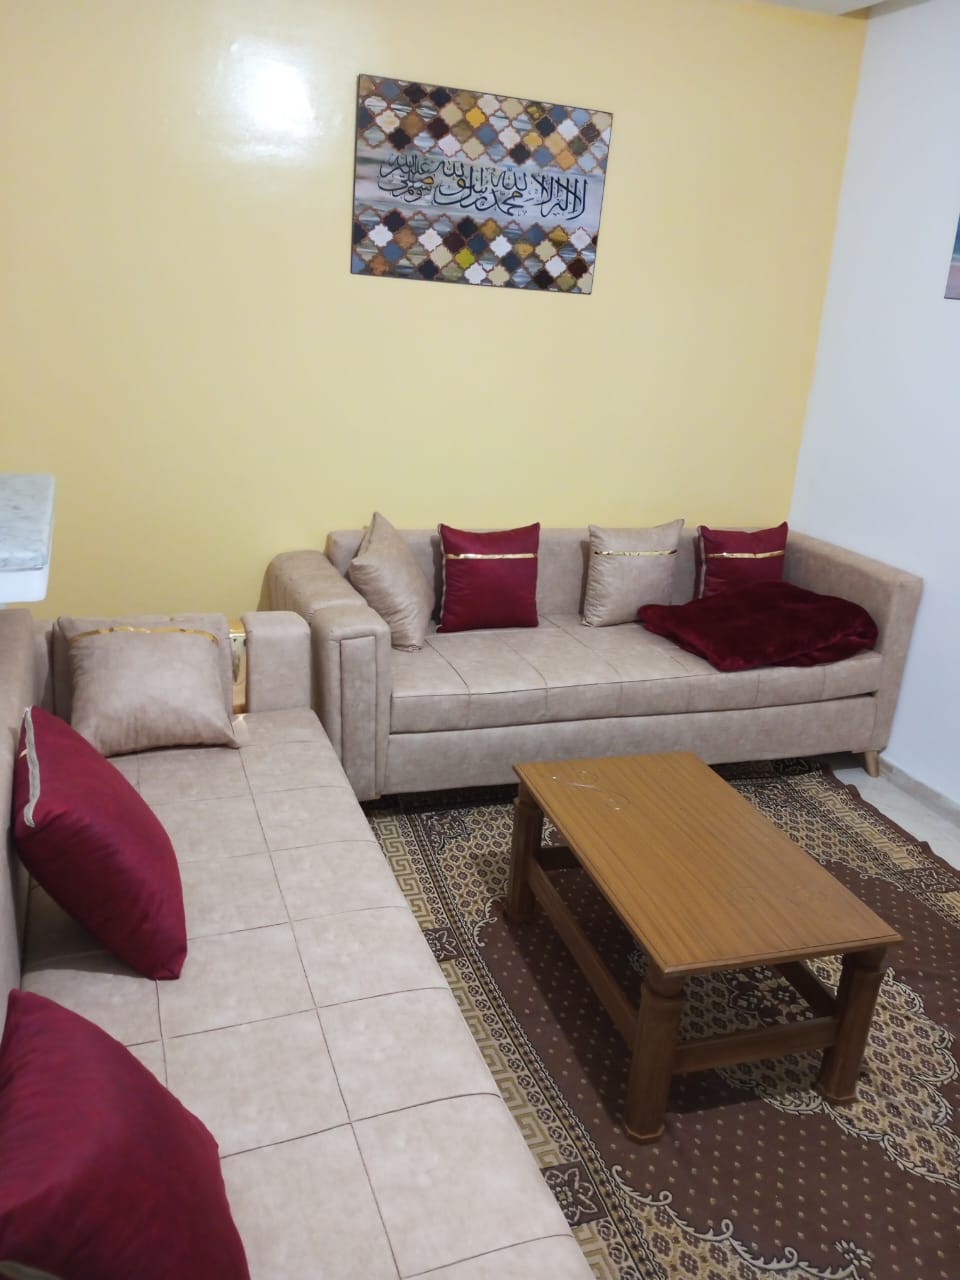 Cite El Khadra Zone urbaine nord Location vacances Appart. 1 pice S plus 1 meubl au centre urbain